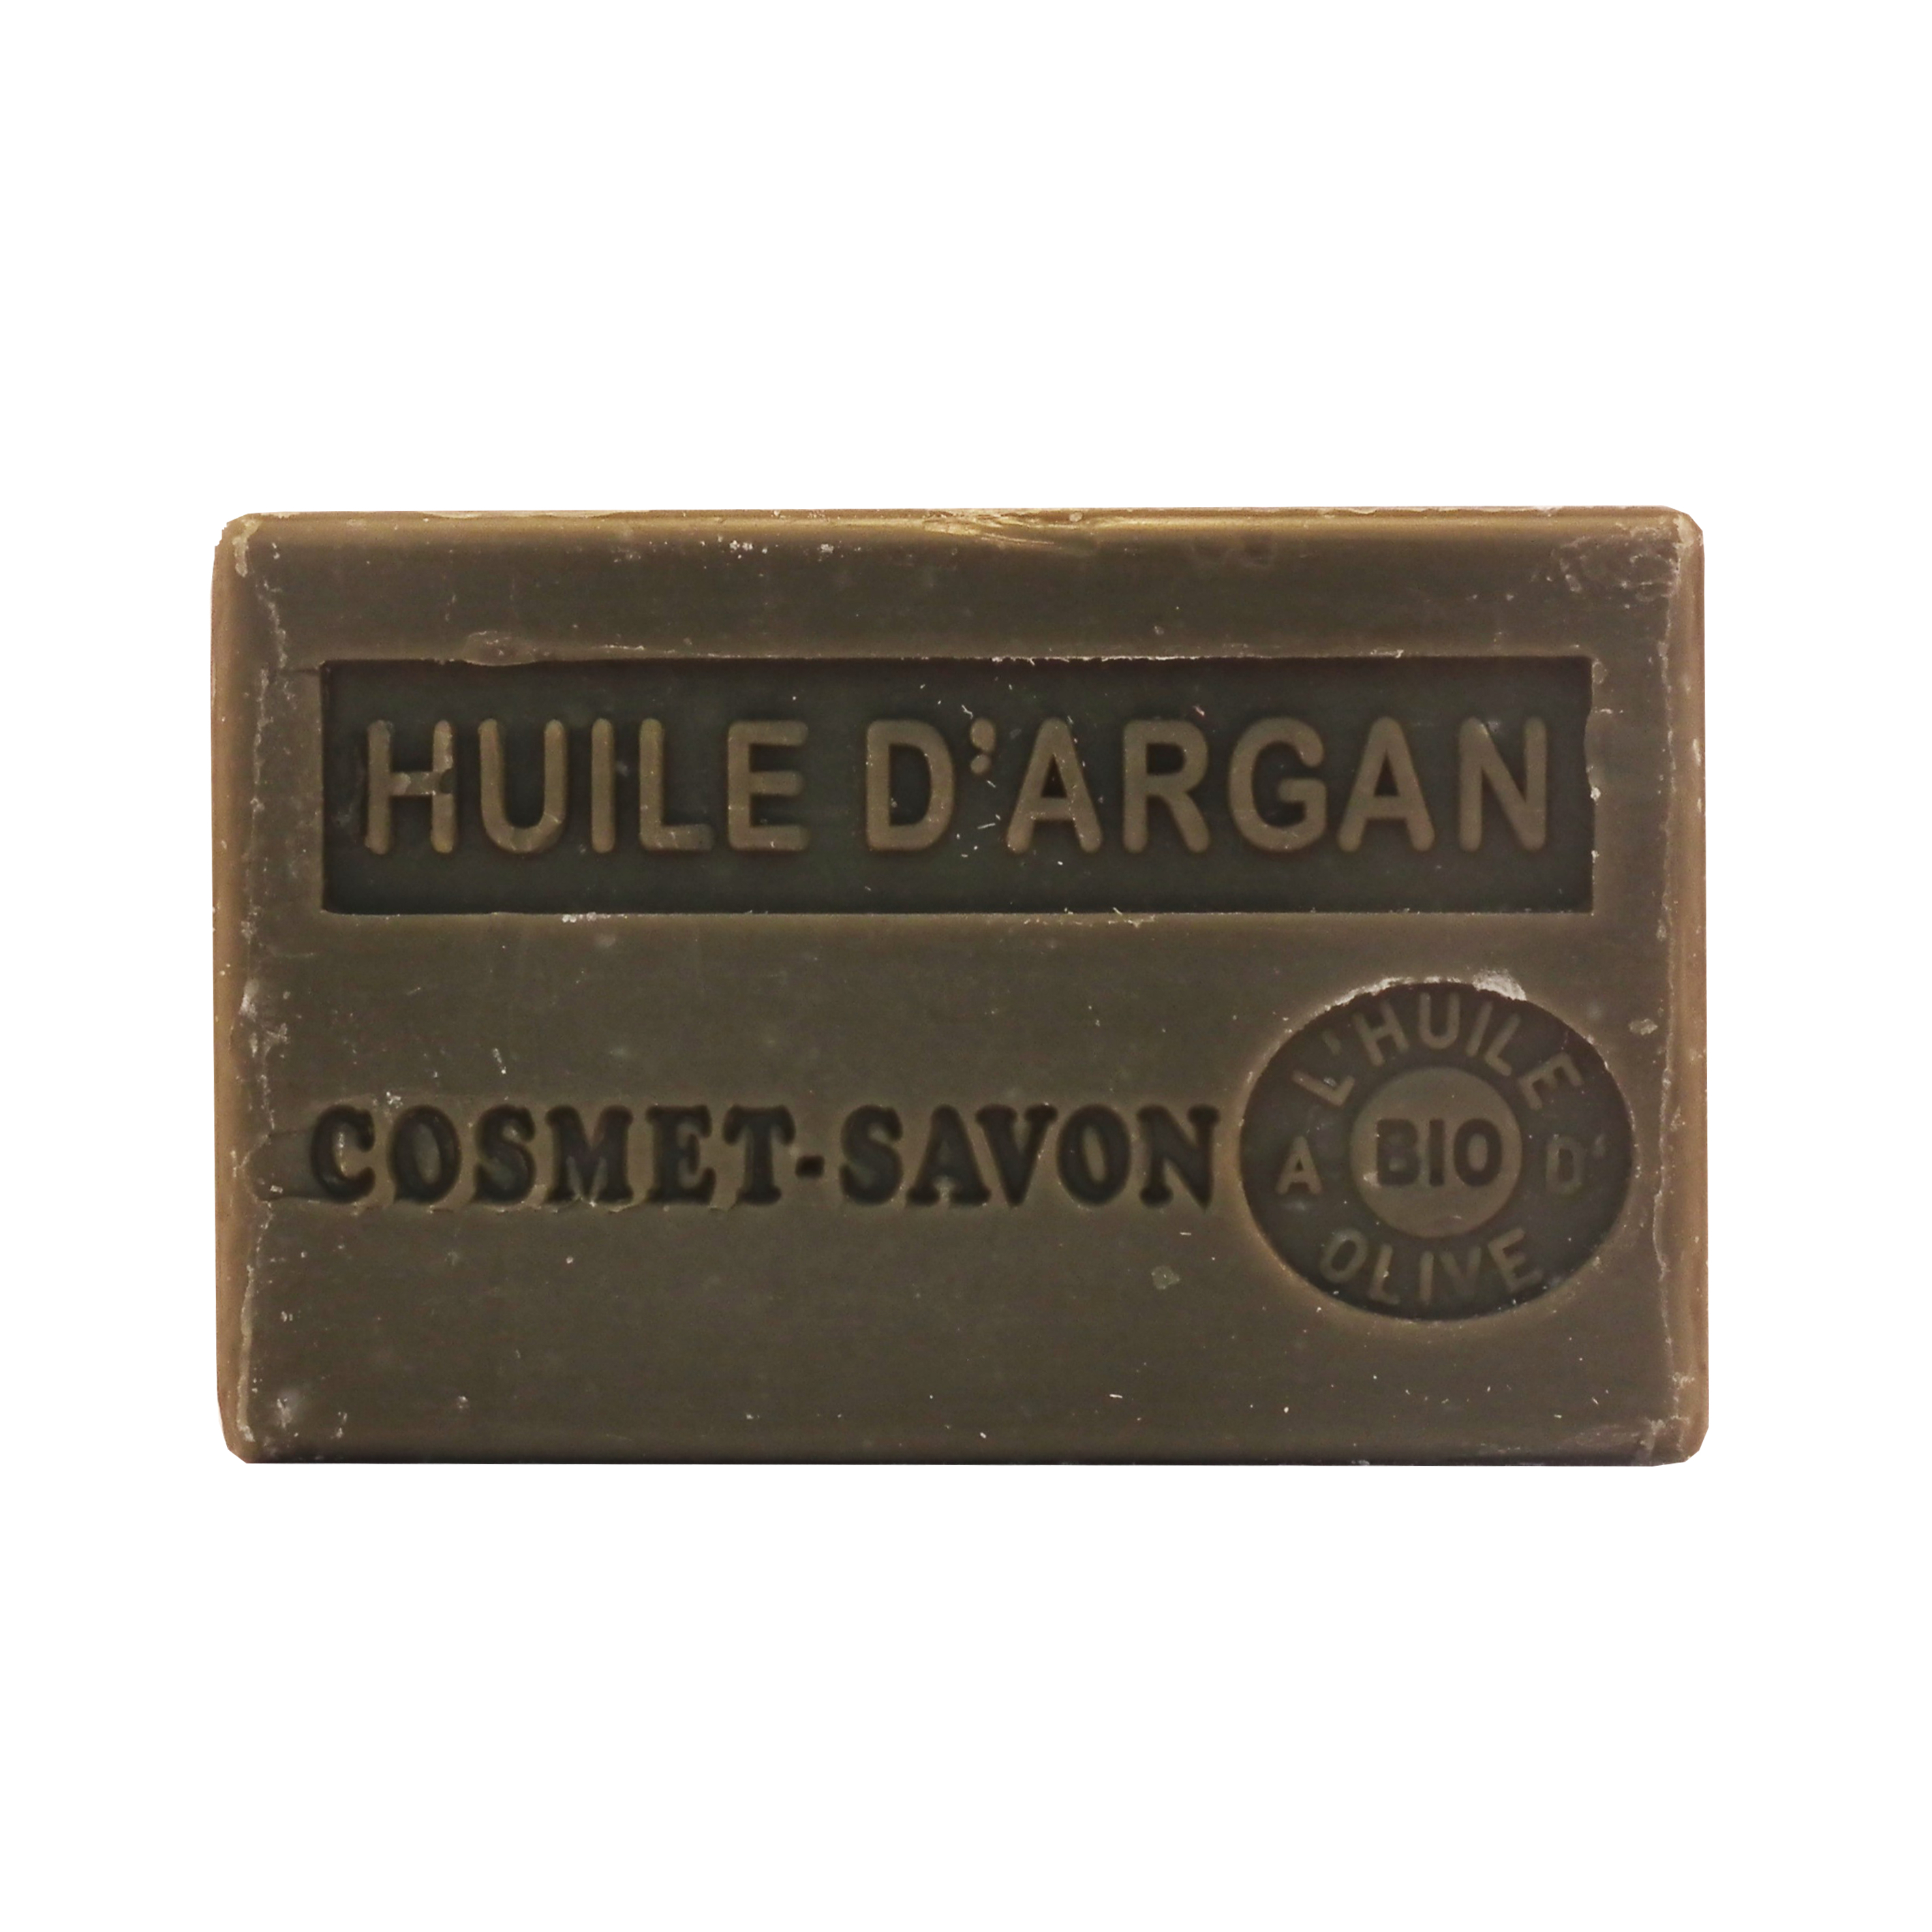 huile-argan-savon-125gr-au-beurre-de-karite-bio-cosmet-savon-3665205006393-face-JPEG